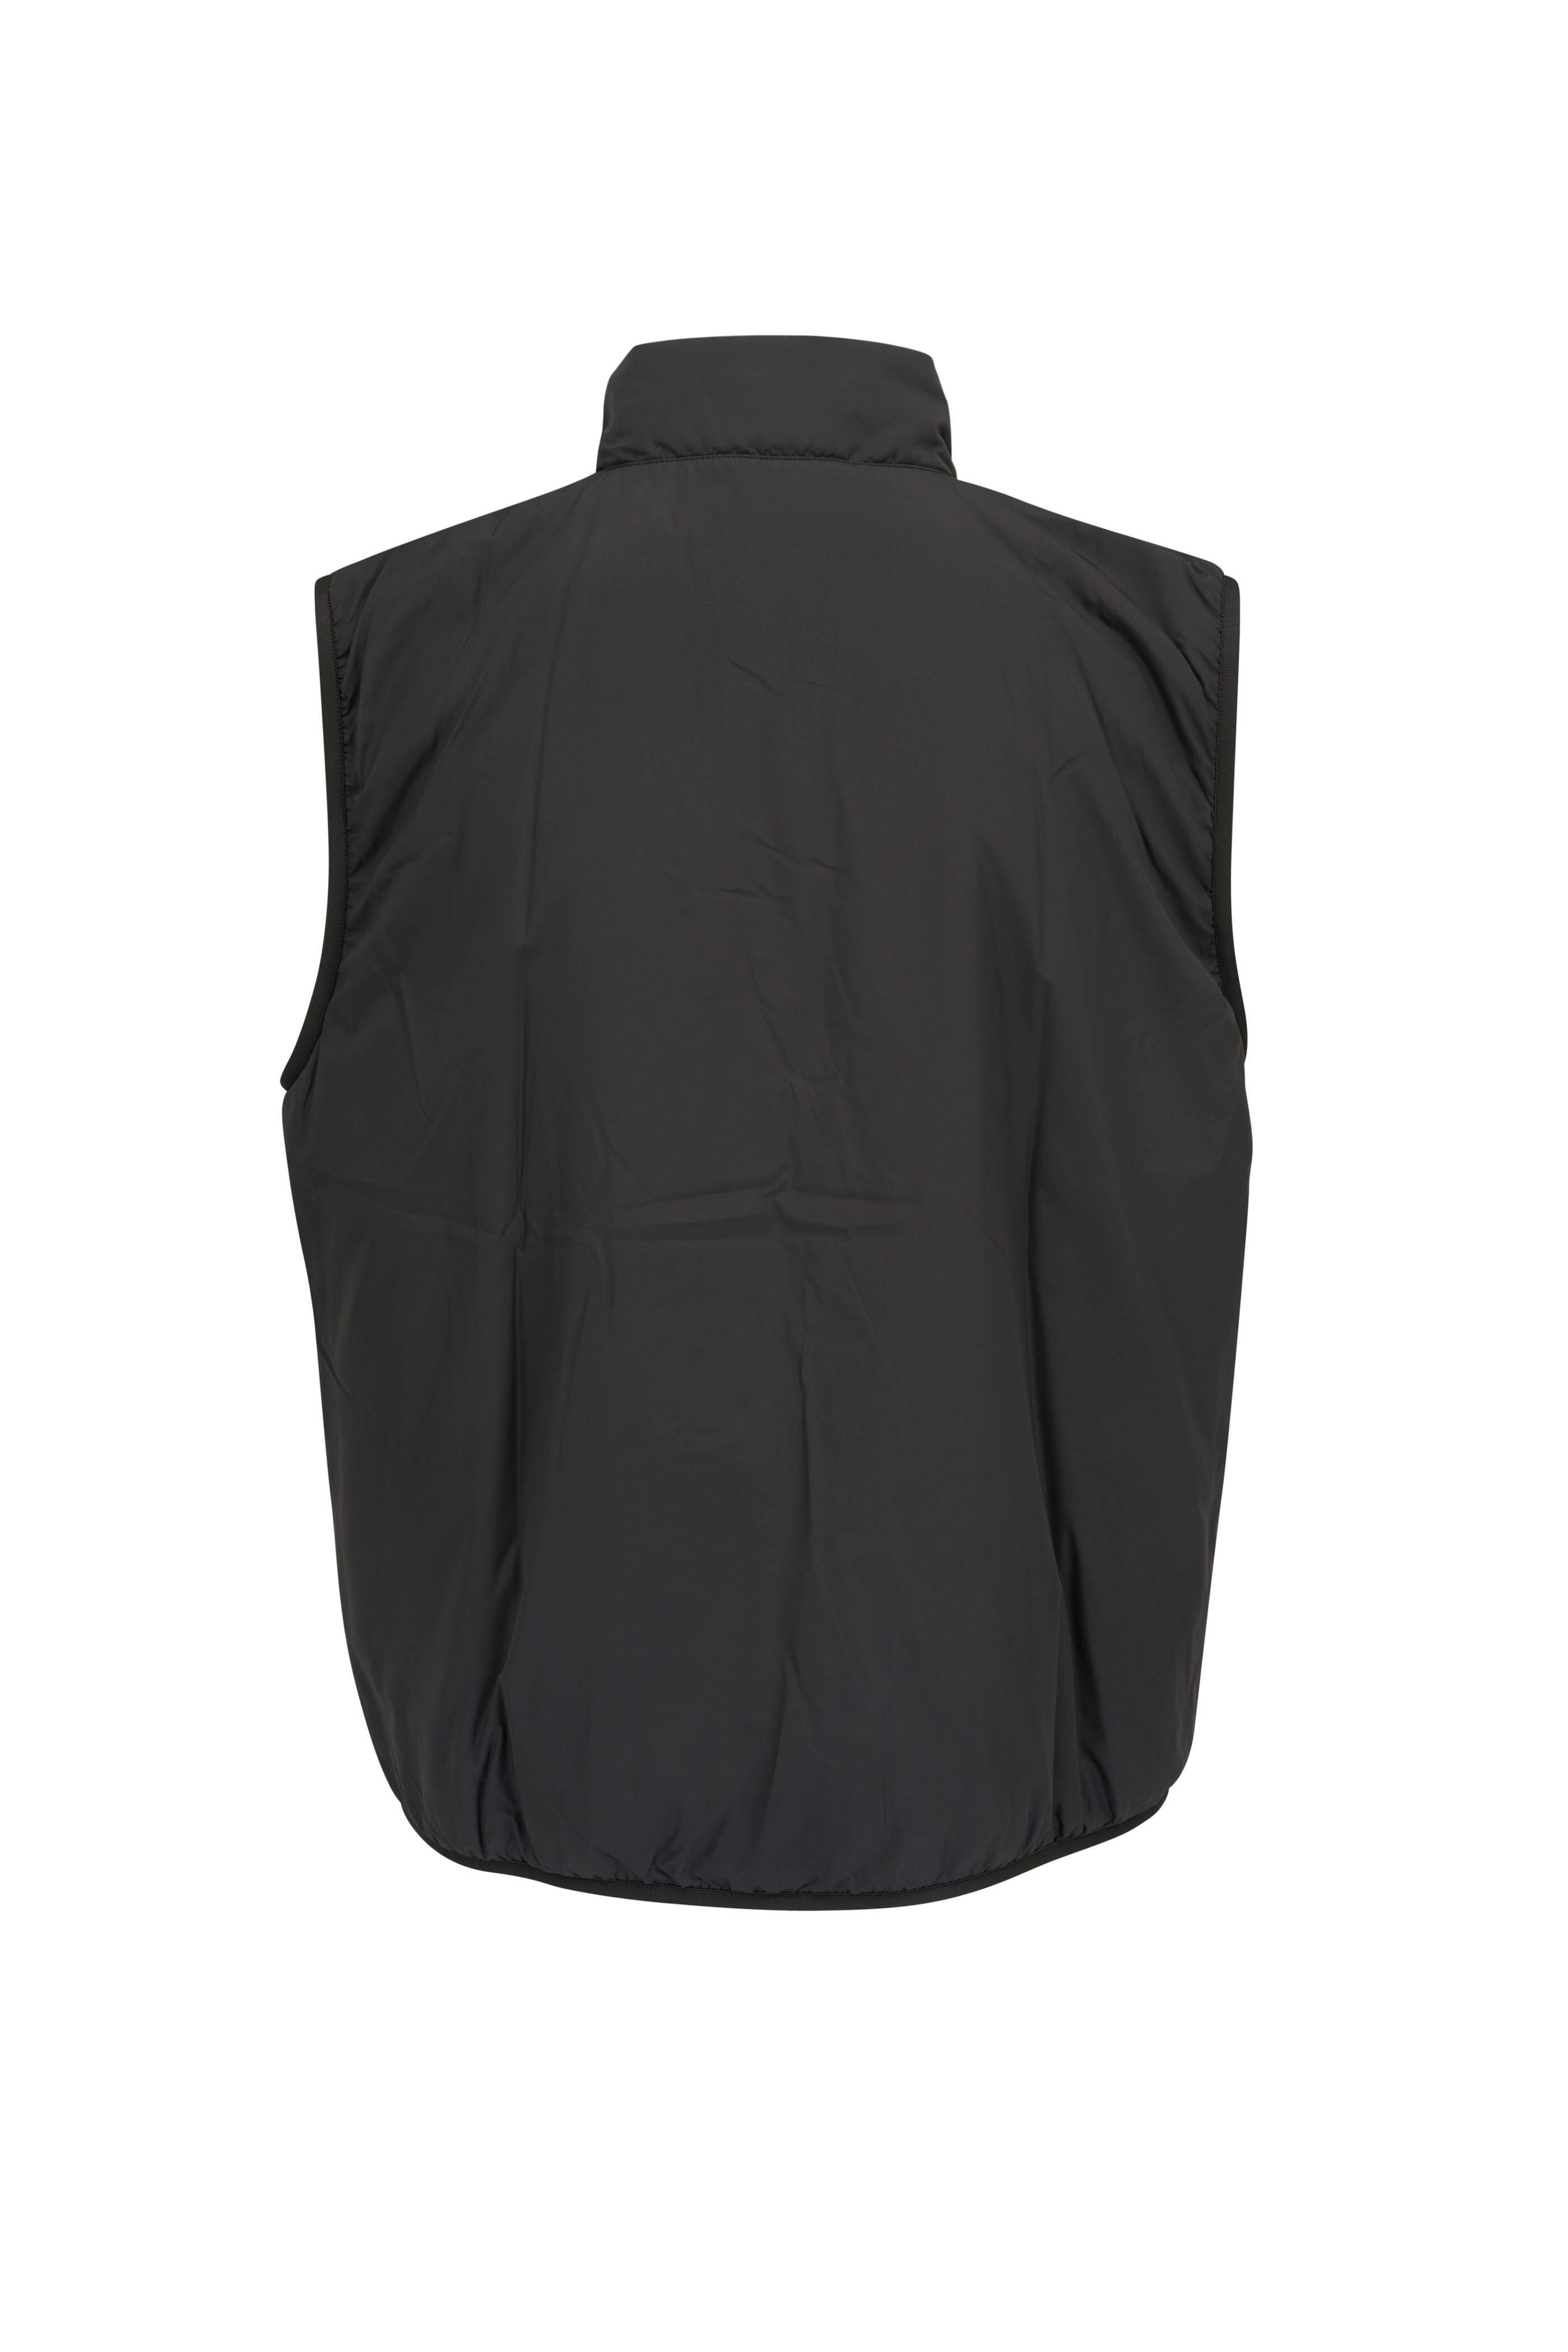 Faherty Brand - Atmosphere Black Vest | Mitchell Stores